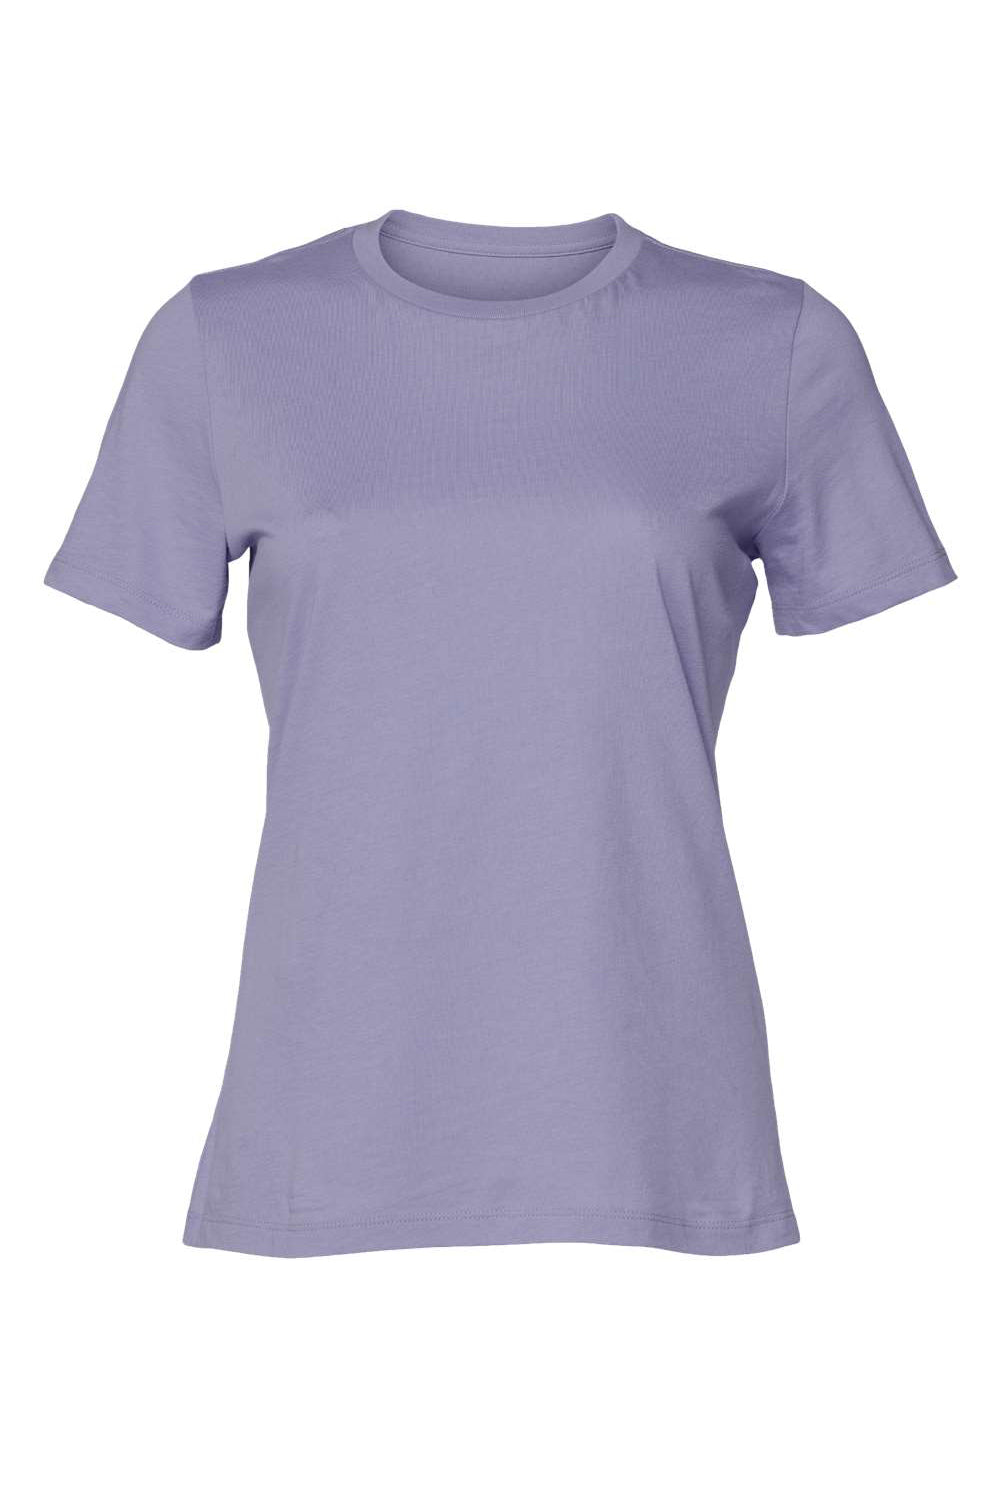 Bella + Canvas BC6400/B6400/6400 Womens Relaxed Jersey Short Sleeve Crewneck T-Shirt Dark Lavender Purple Flat Front